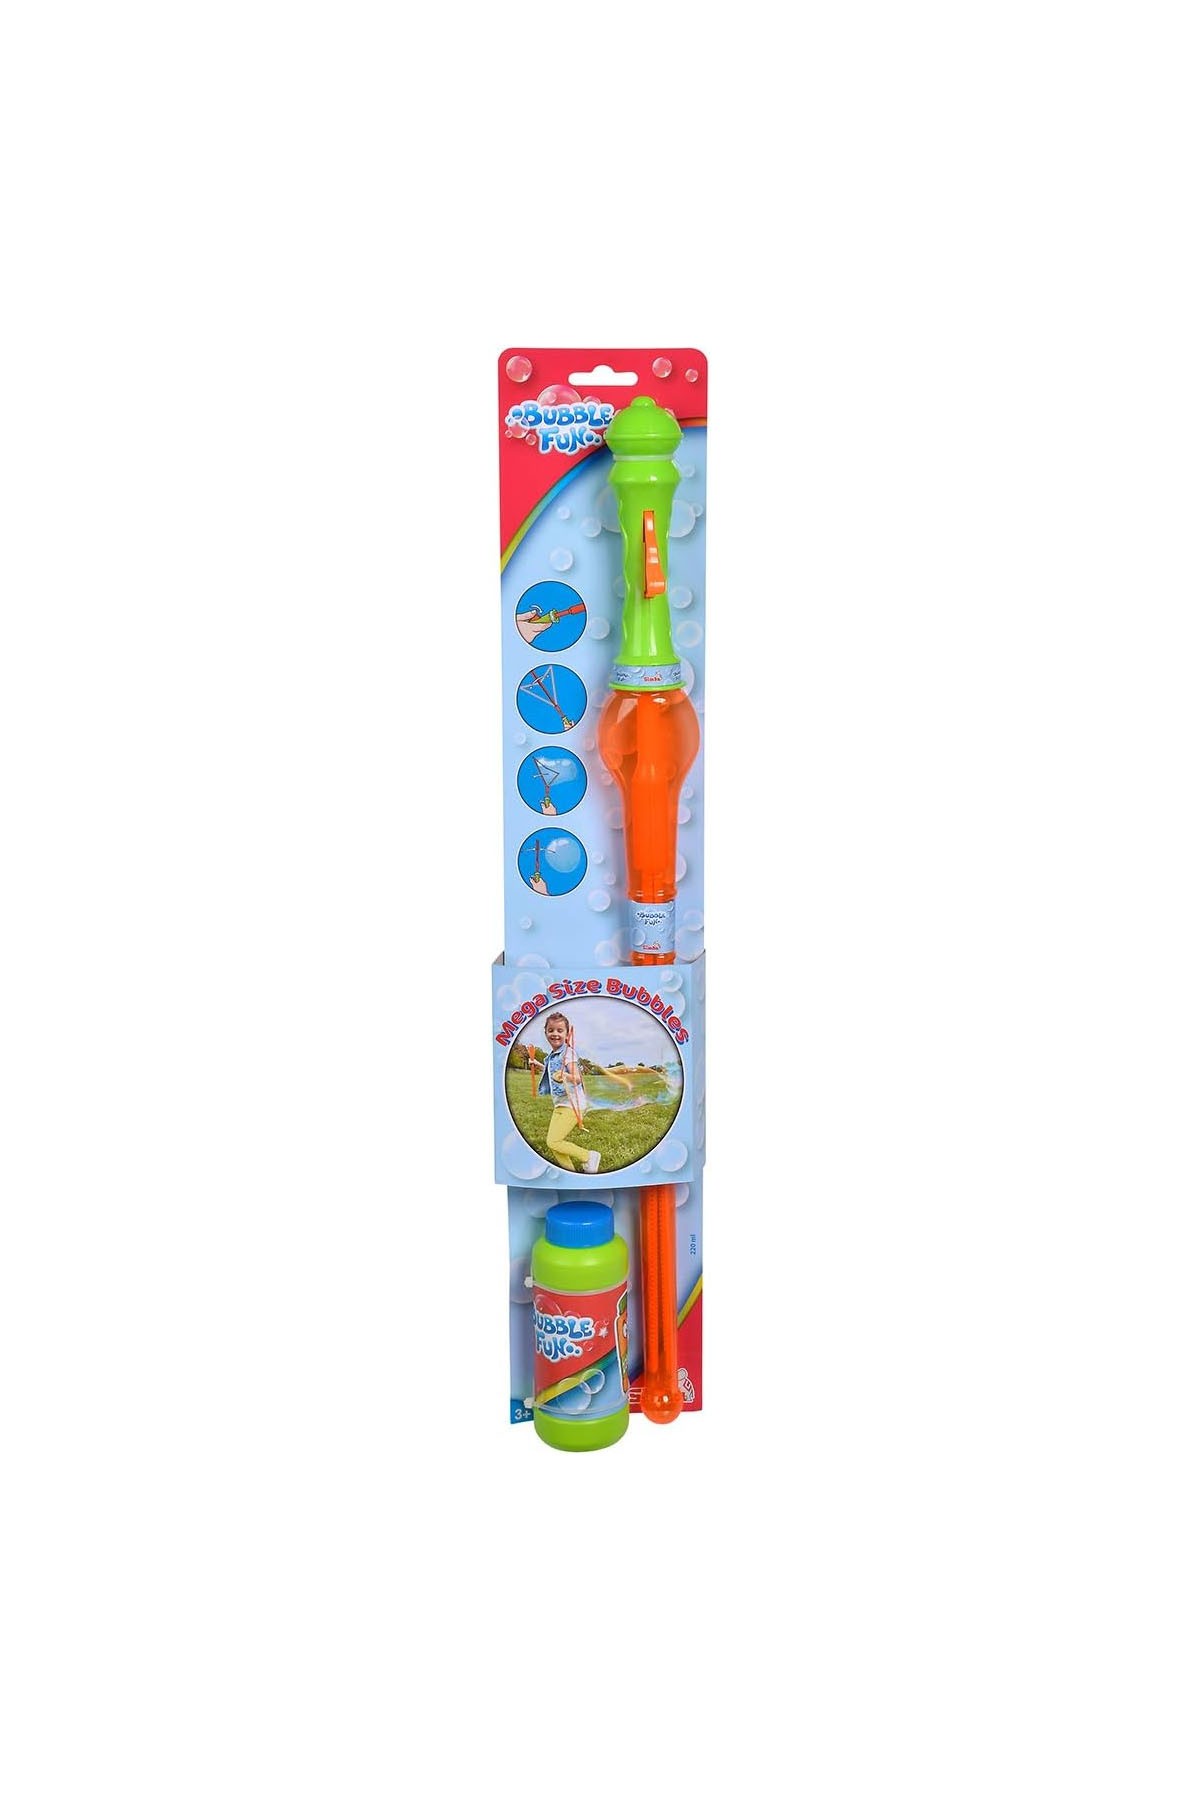 Simba Bubble Fun Bubble Stick XL